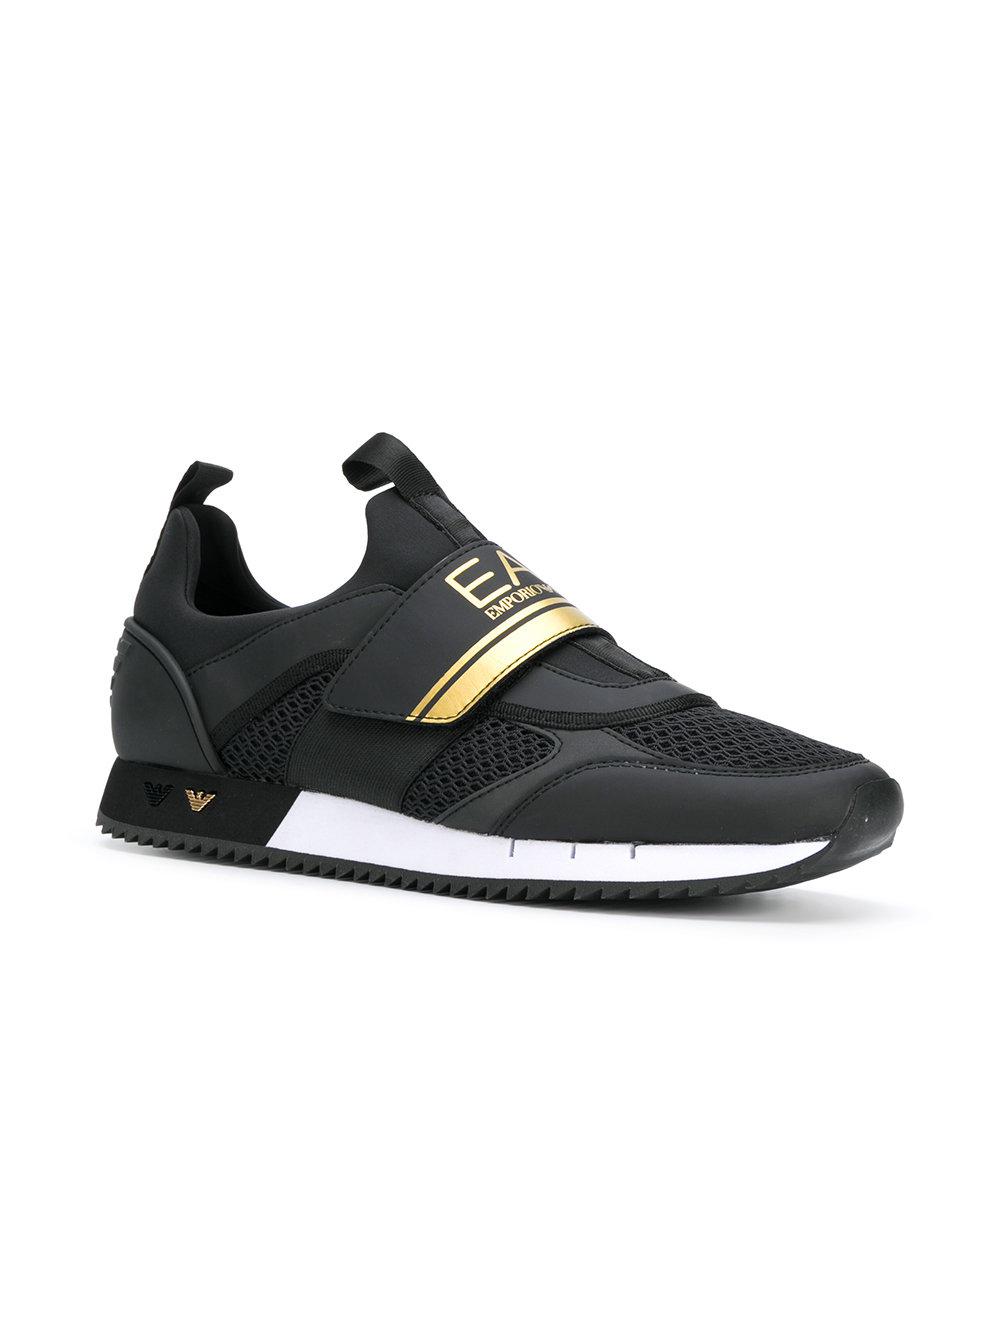 EA7 Synthetic Runner Sneakers in Black for Men - Lyst